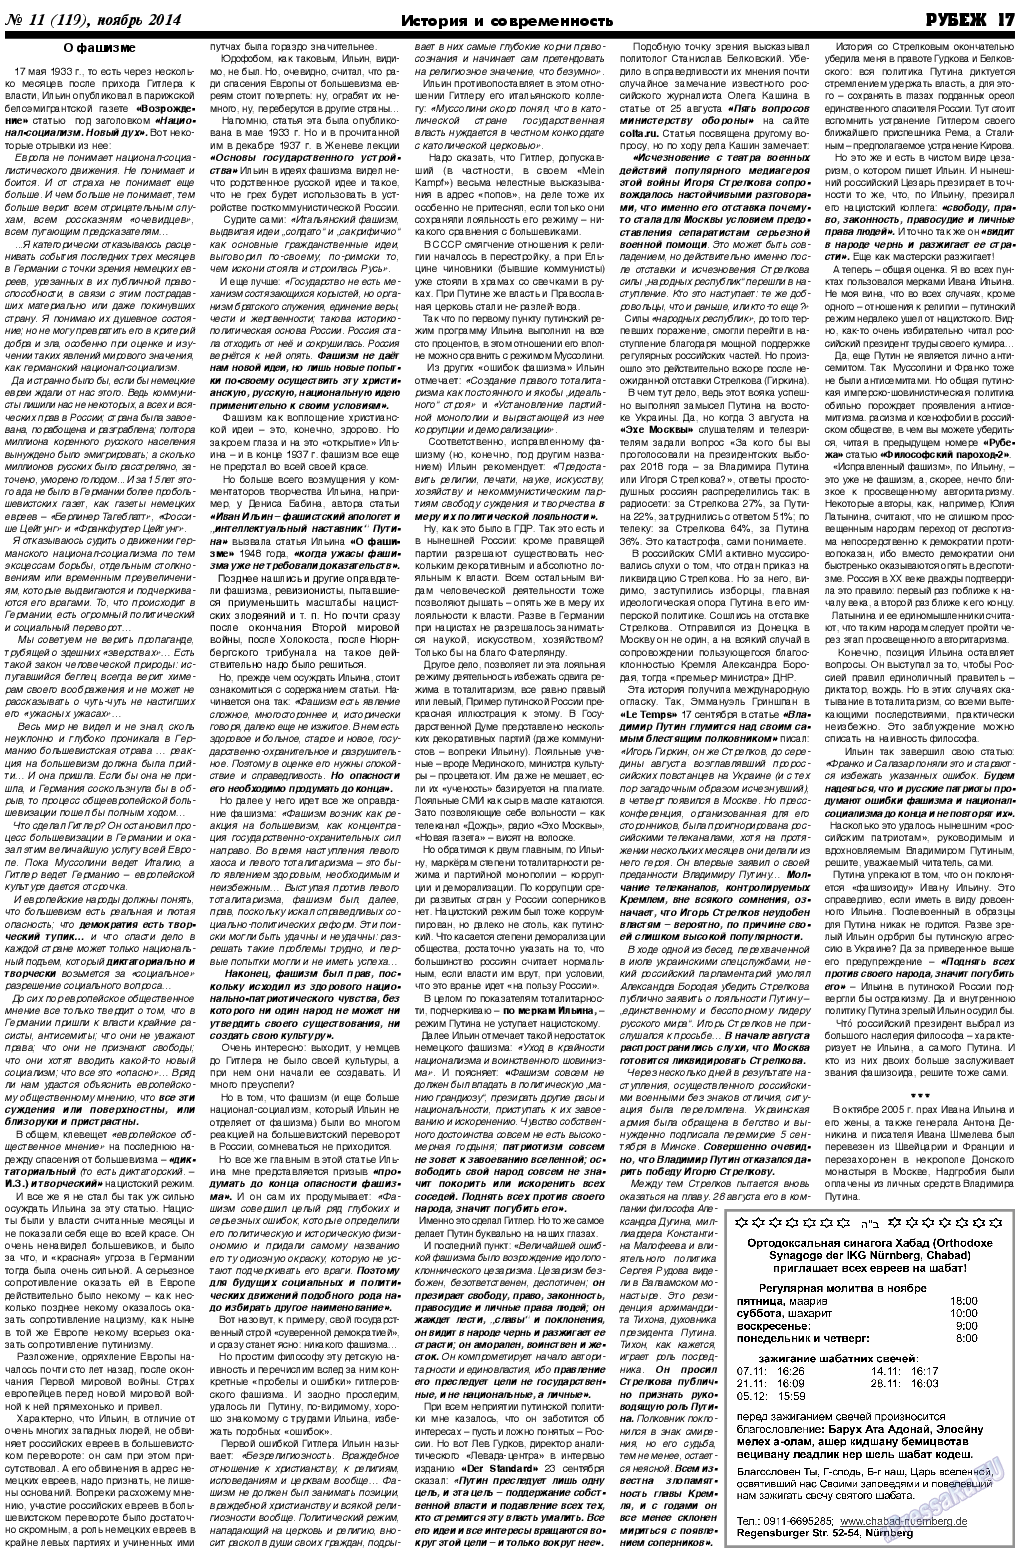 Рубеж, газета. 2014 №11 стр.17